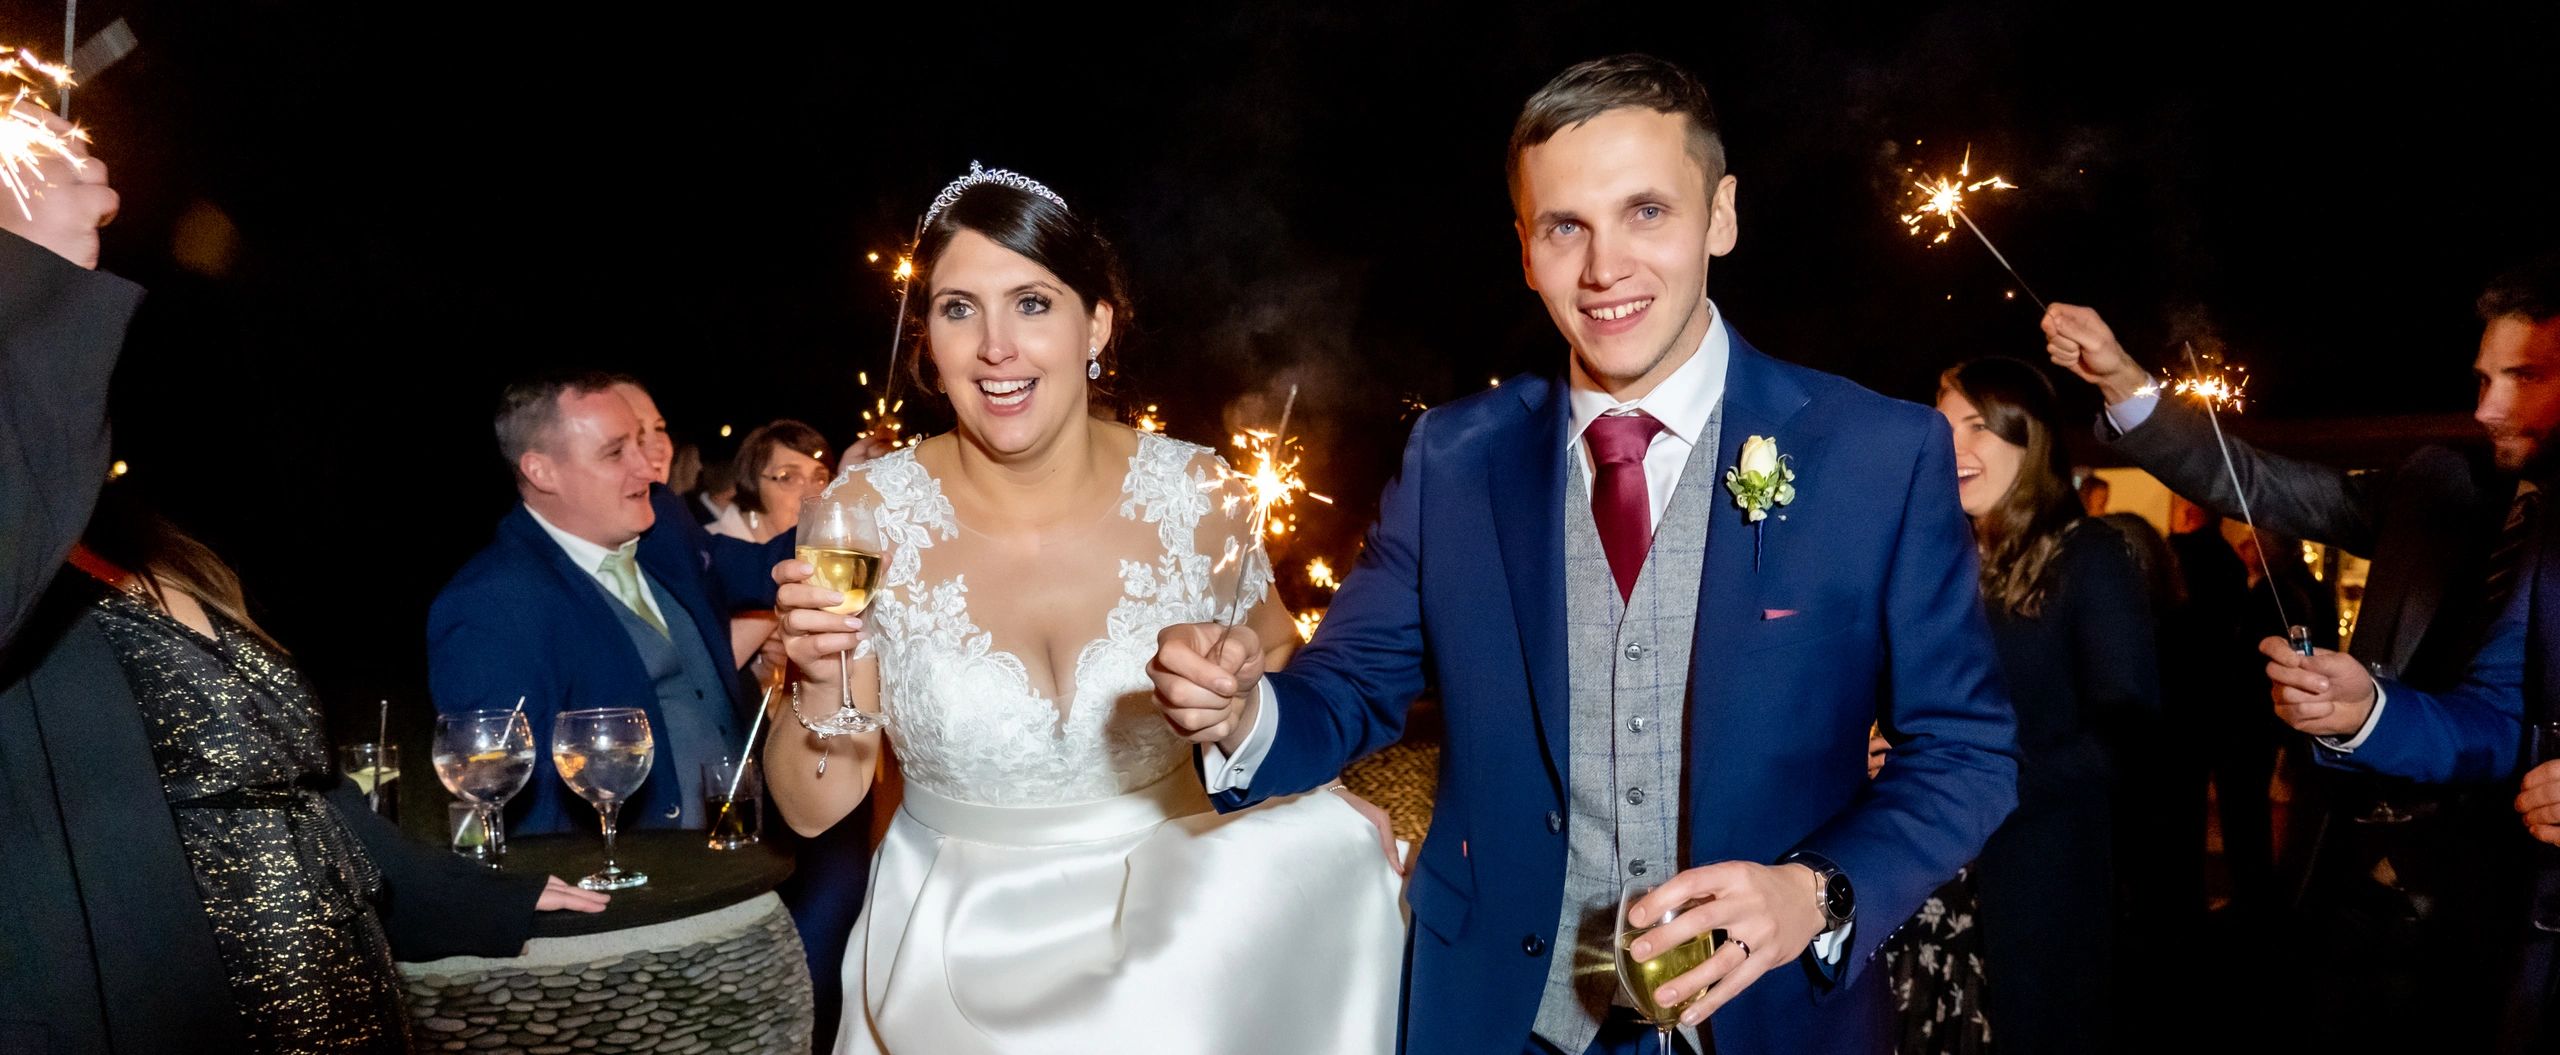 Contemporary reportage natural wedding photograph bride groom sparklers photo Berkshire Newbury